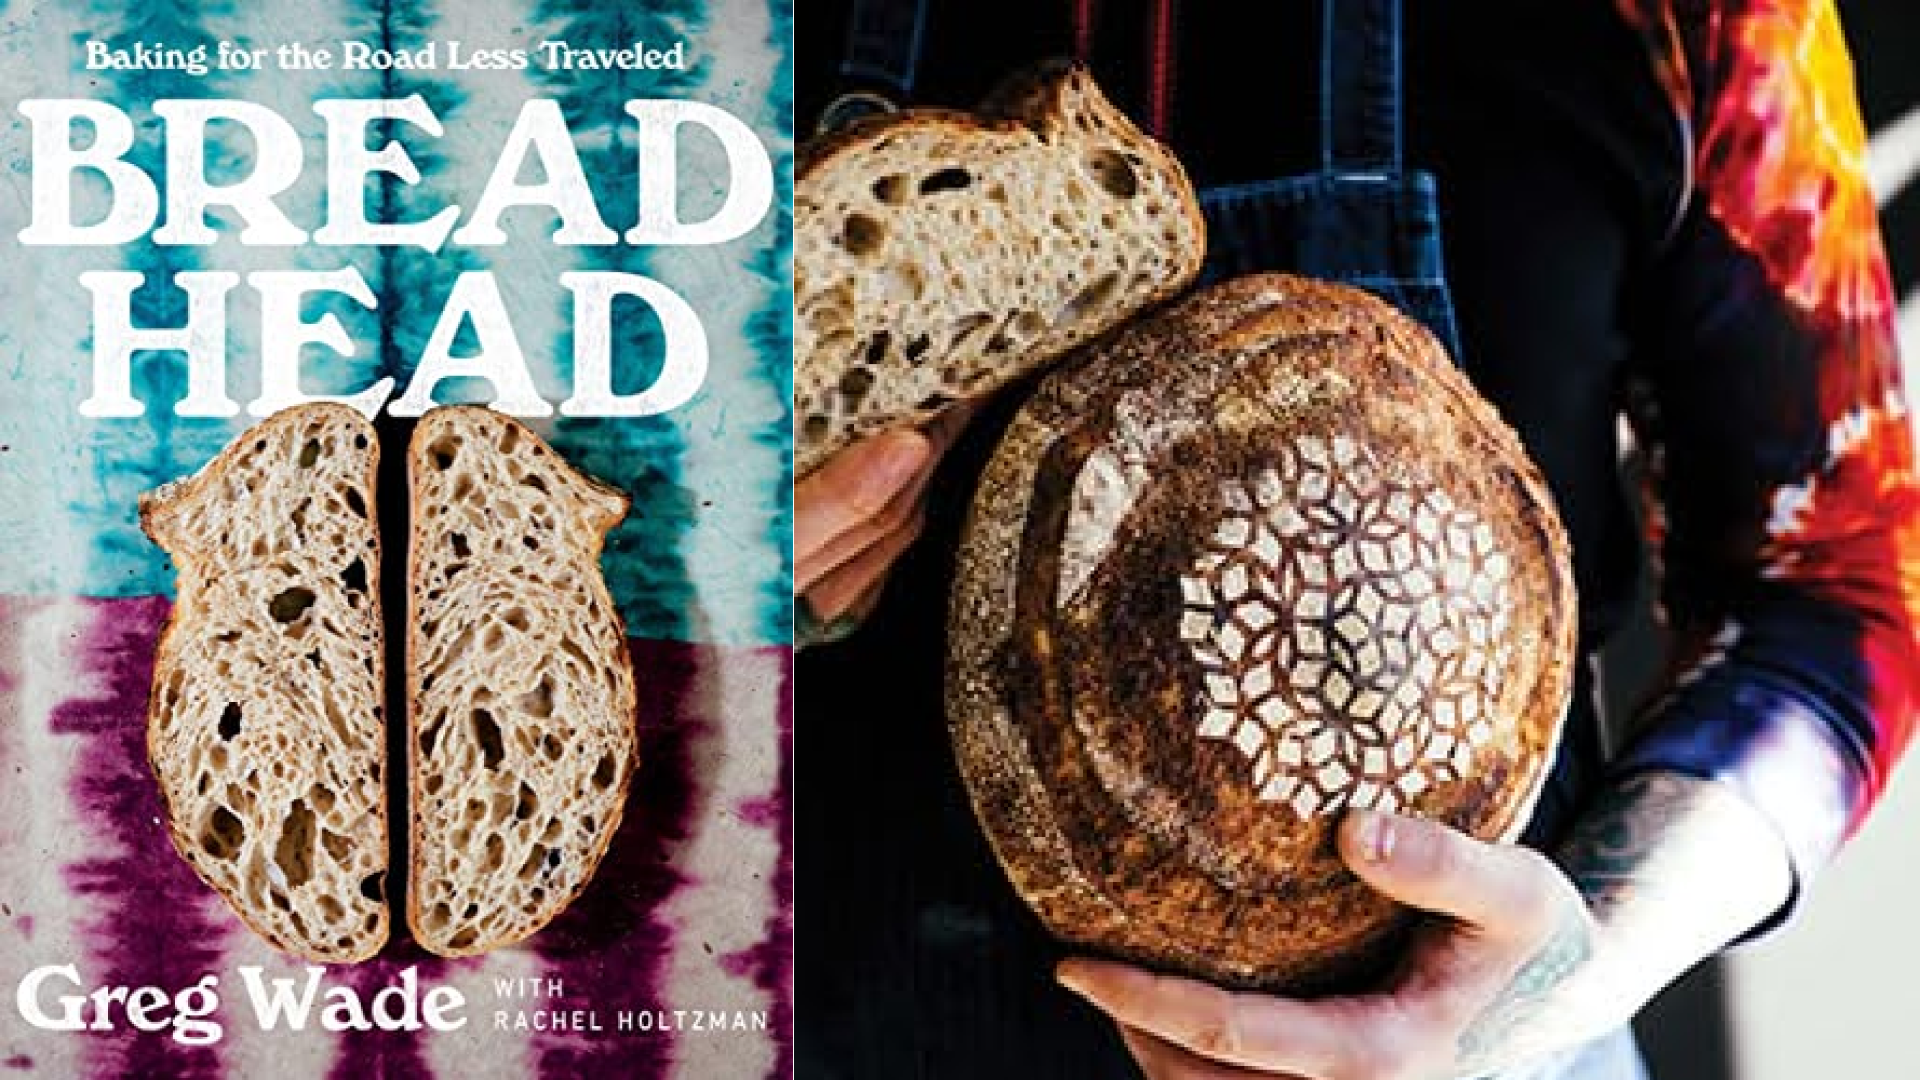 Bread baking book